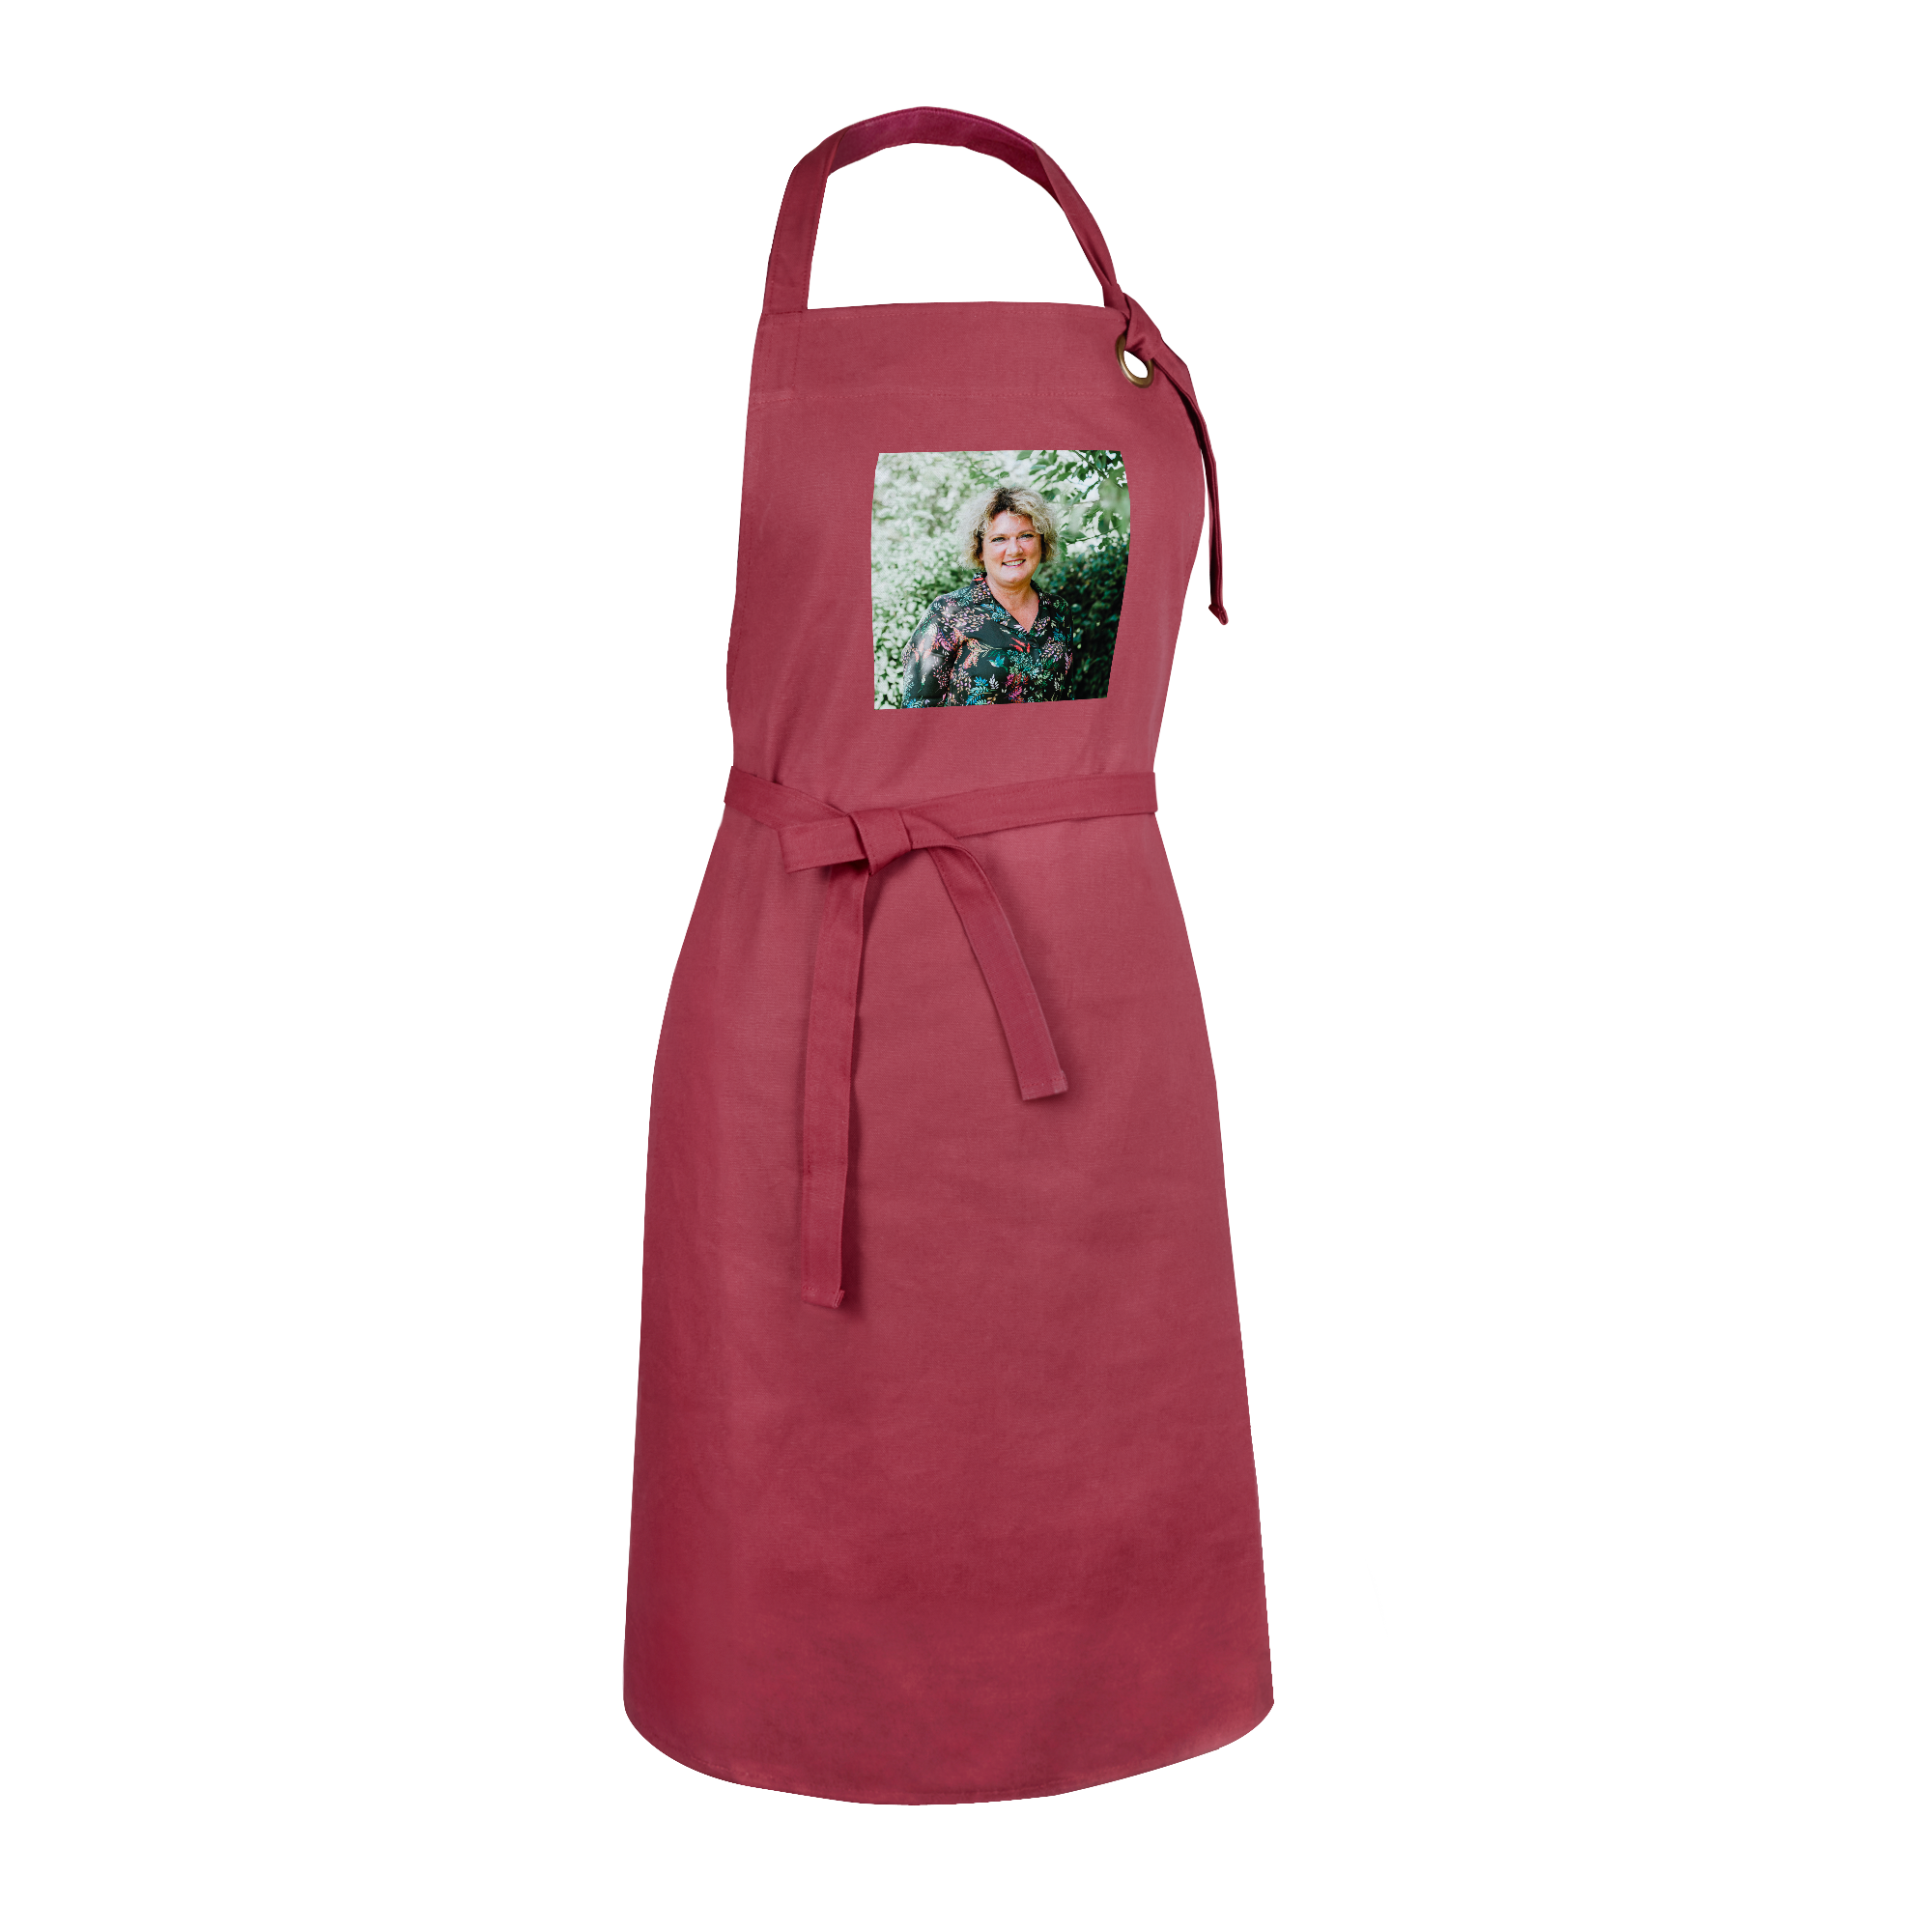 Personalised kitchen apron - Burgundy